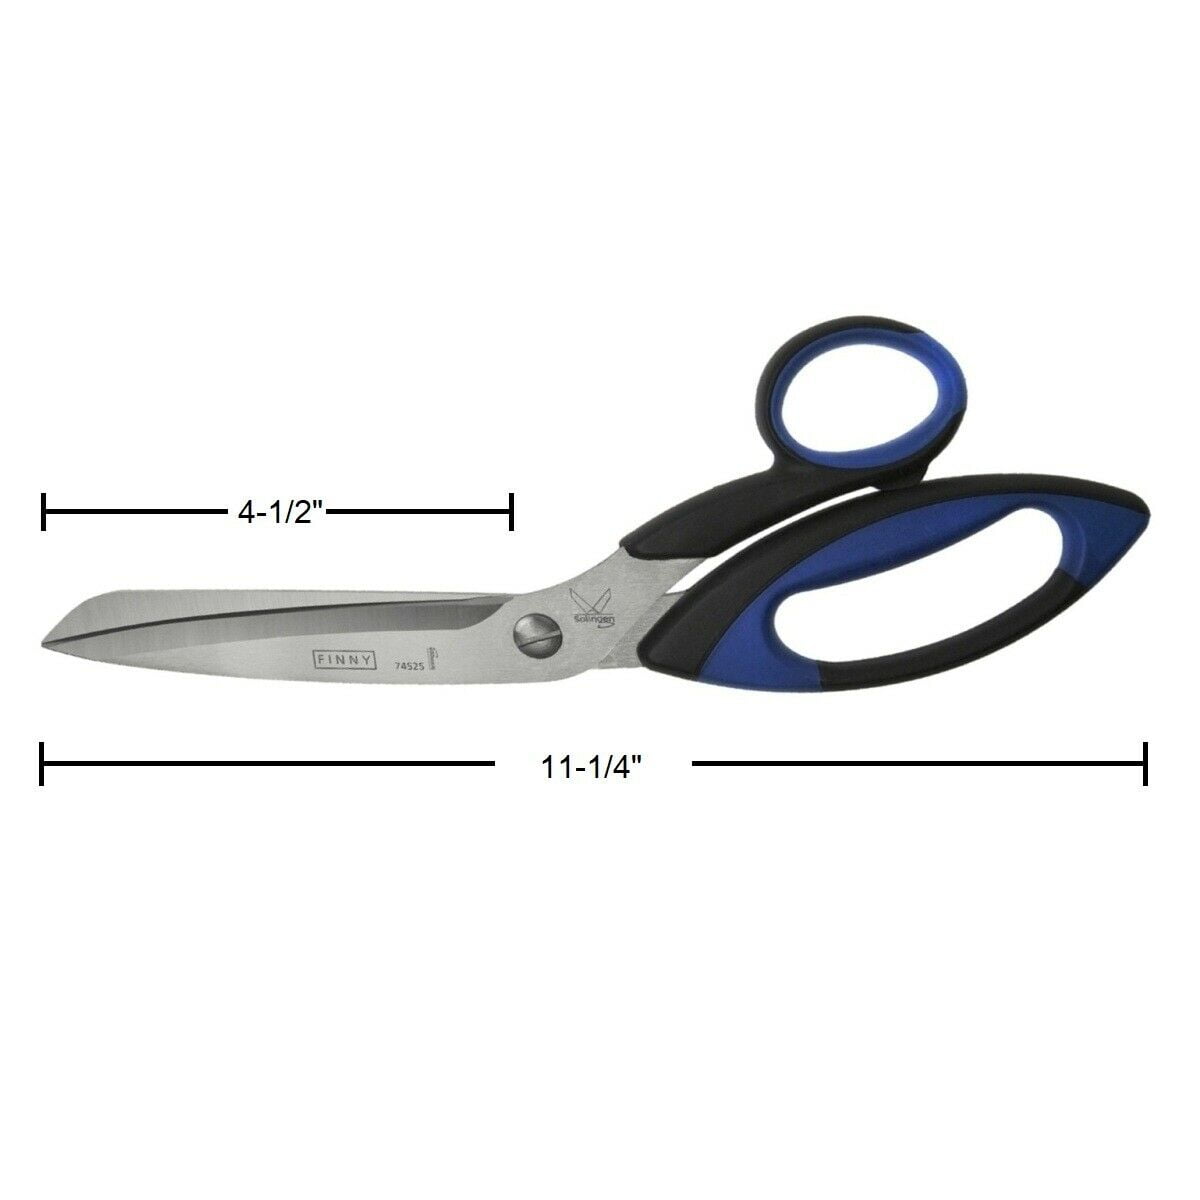 SINGER ProSeries 10” Tailor Dressmaking Shears, 4.5” Detail Scissors, 96”  Retractable Tape Measure (3 PC Set)